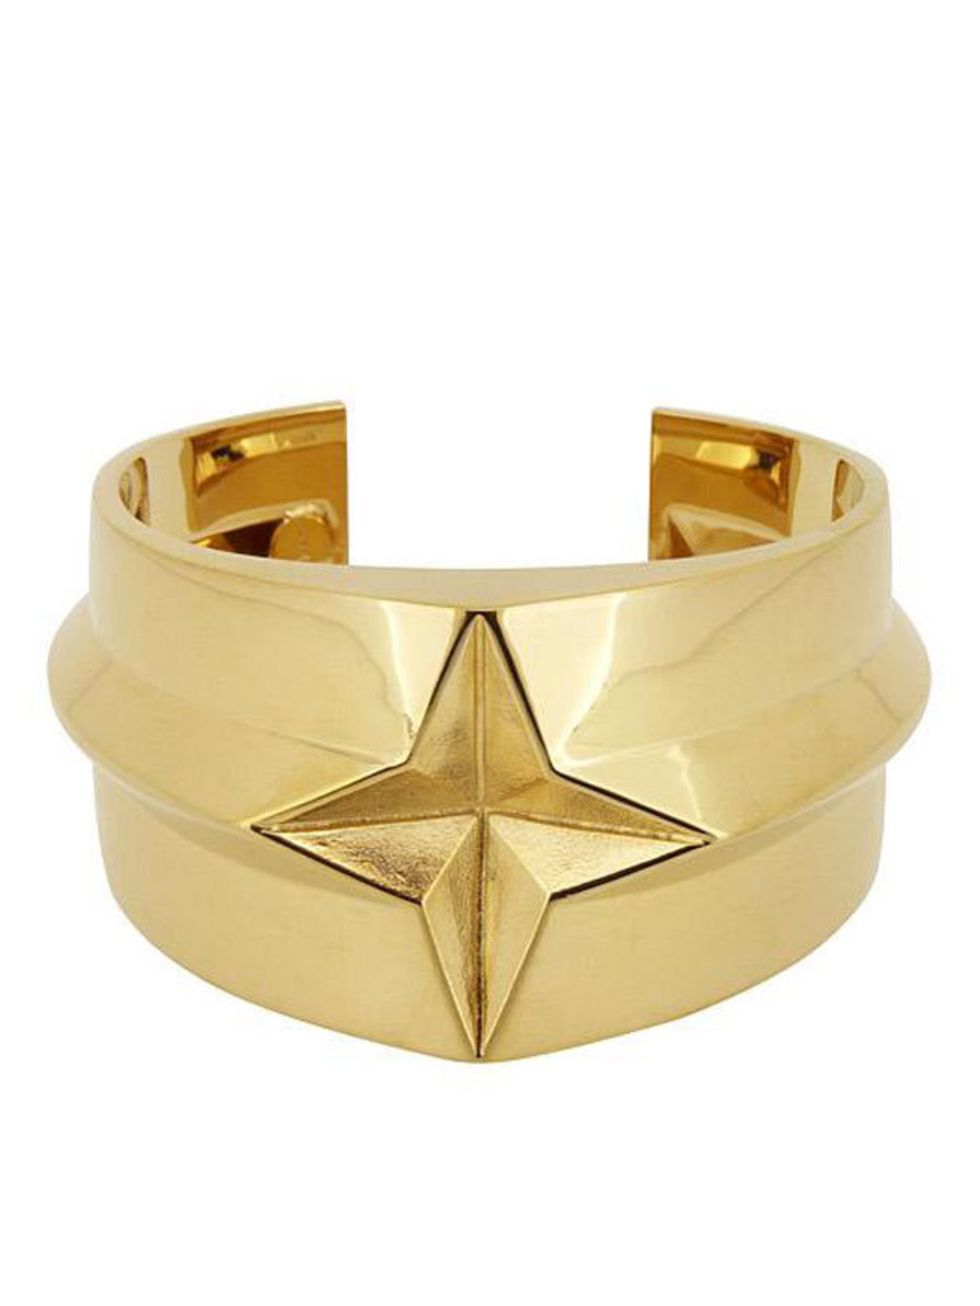 <p><a href="http://www.lucasjack.com/cms/index.php/bracelets/star-gold-cuff.html">Lucas Jack</a> star gold cuff, £92</p>